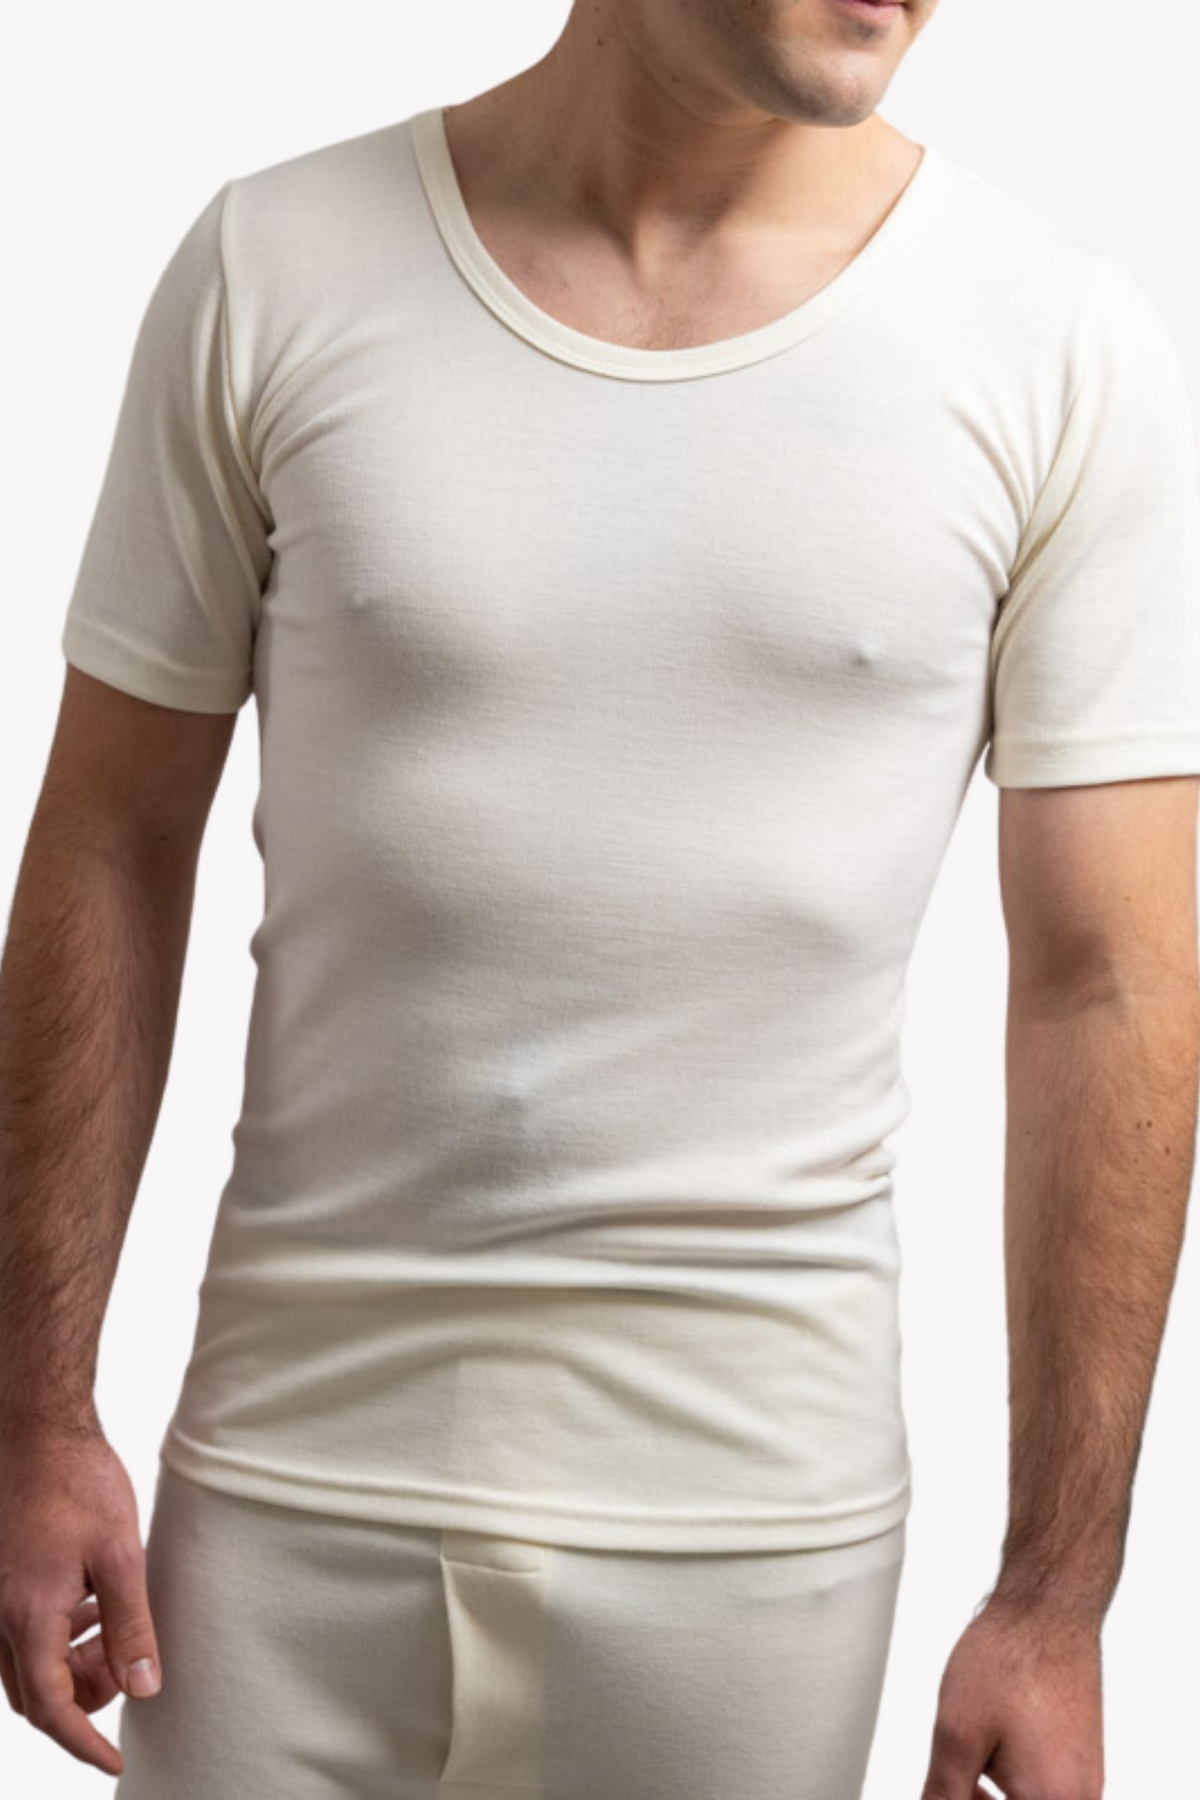 Men's Classic Thermal Top (Short Sleeves 999)